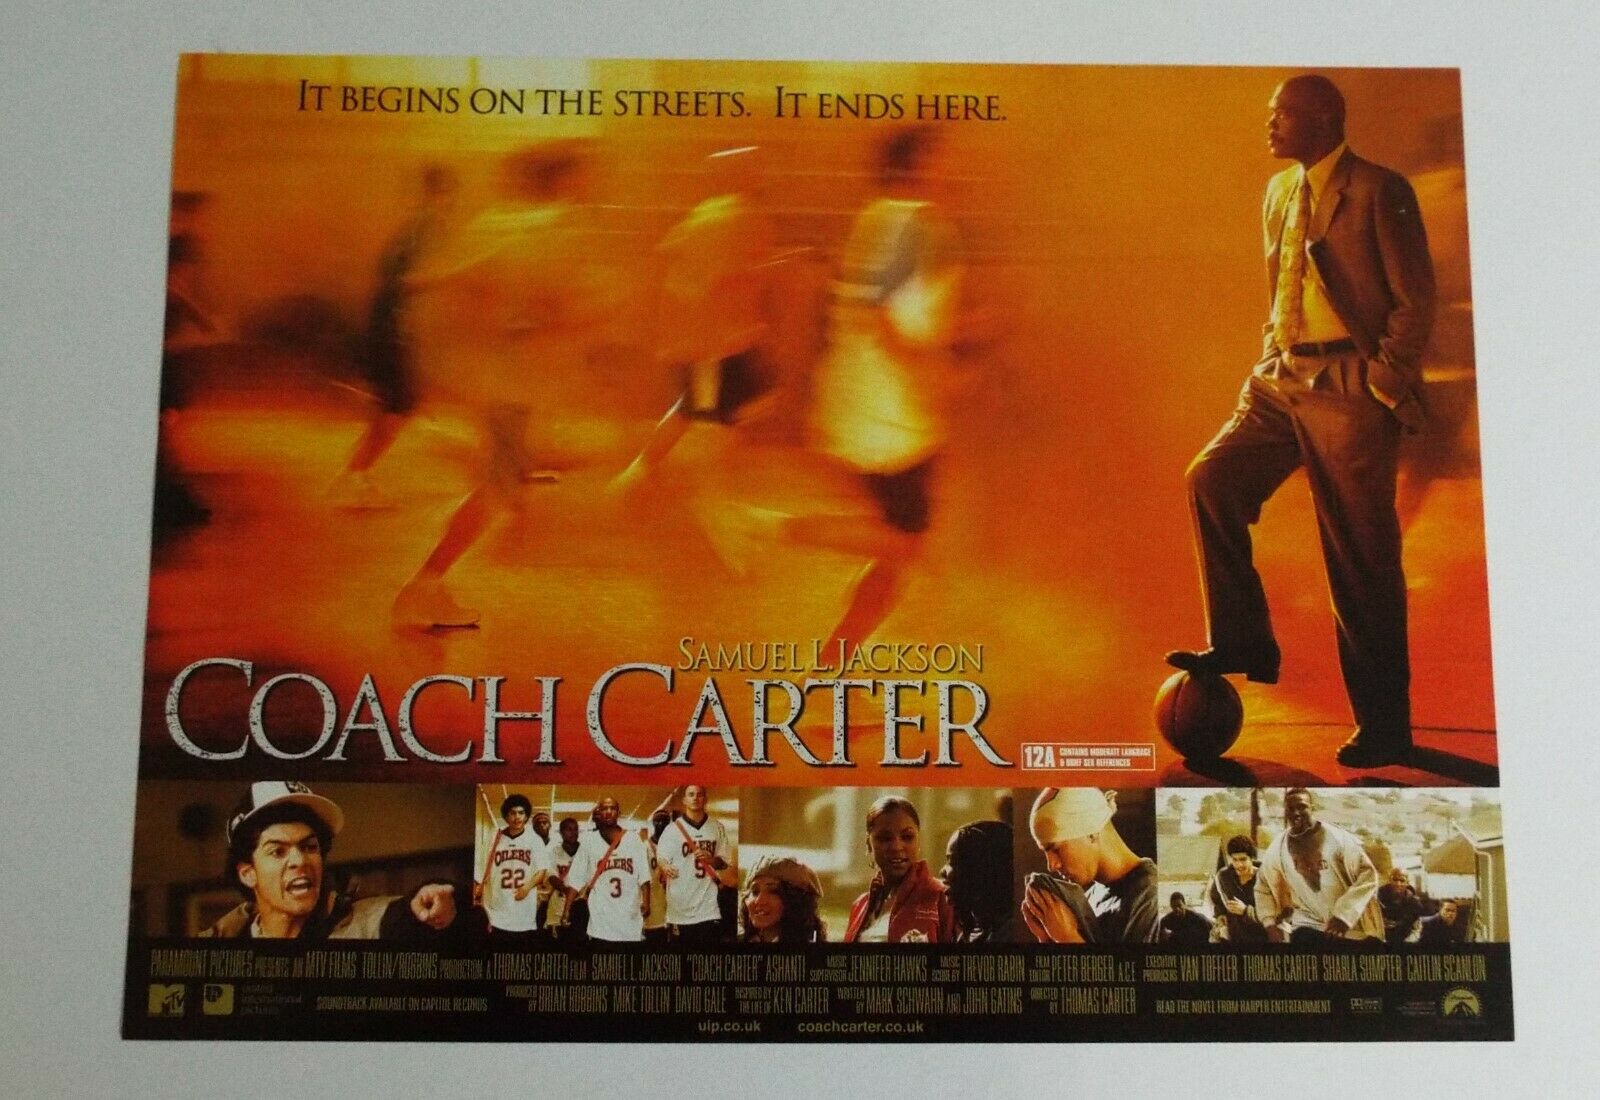 Coach Carter - Wikipedia